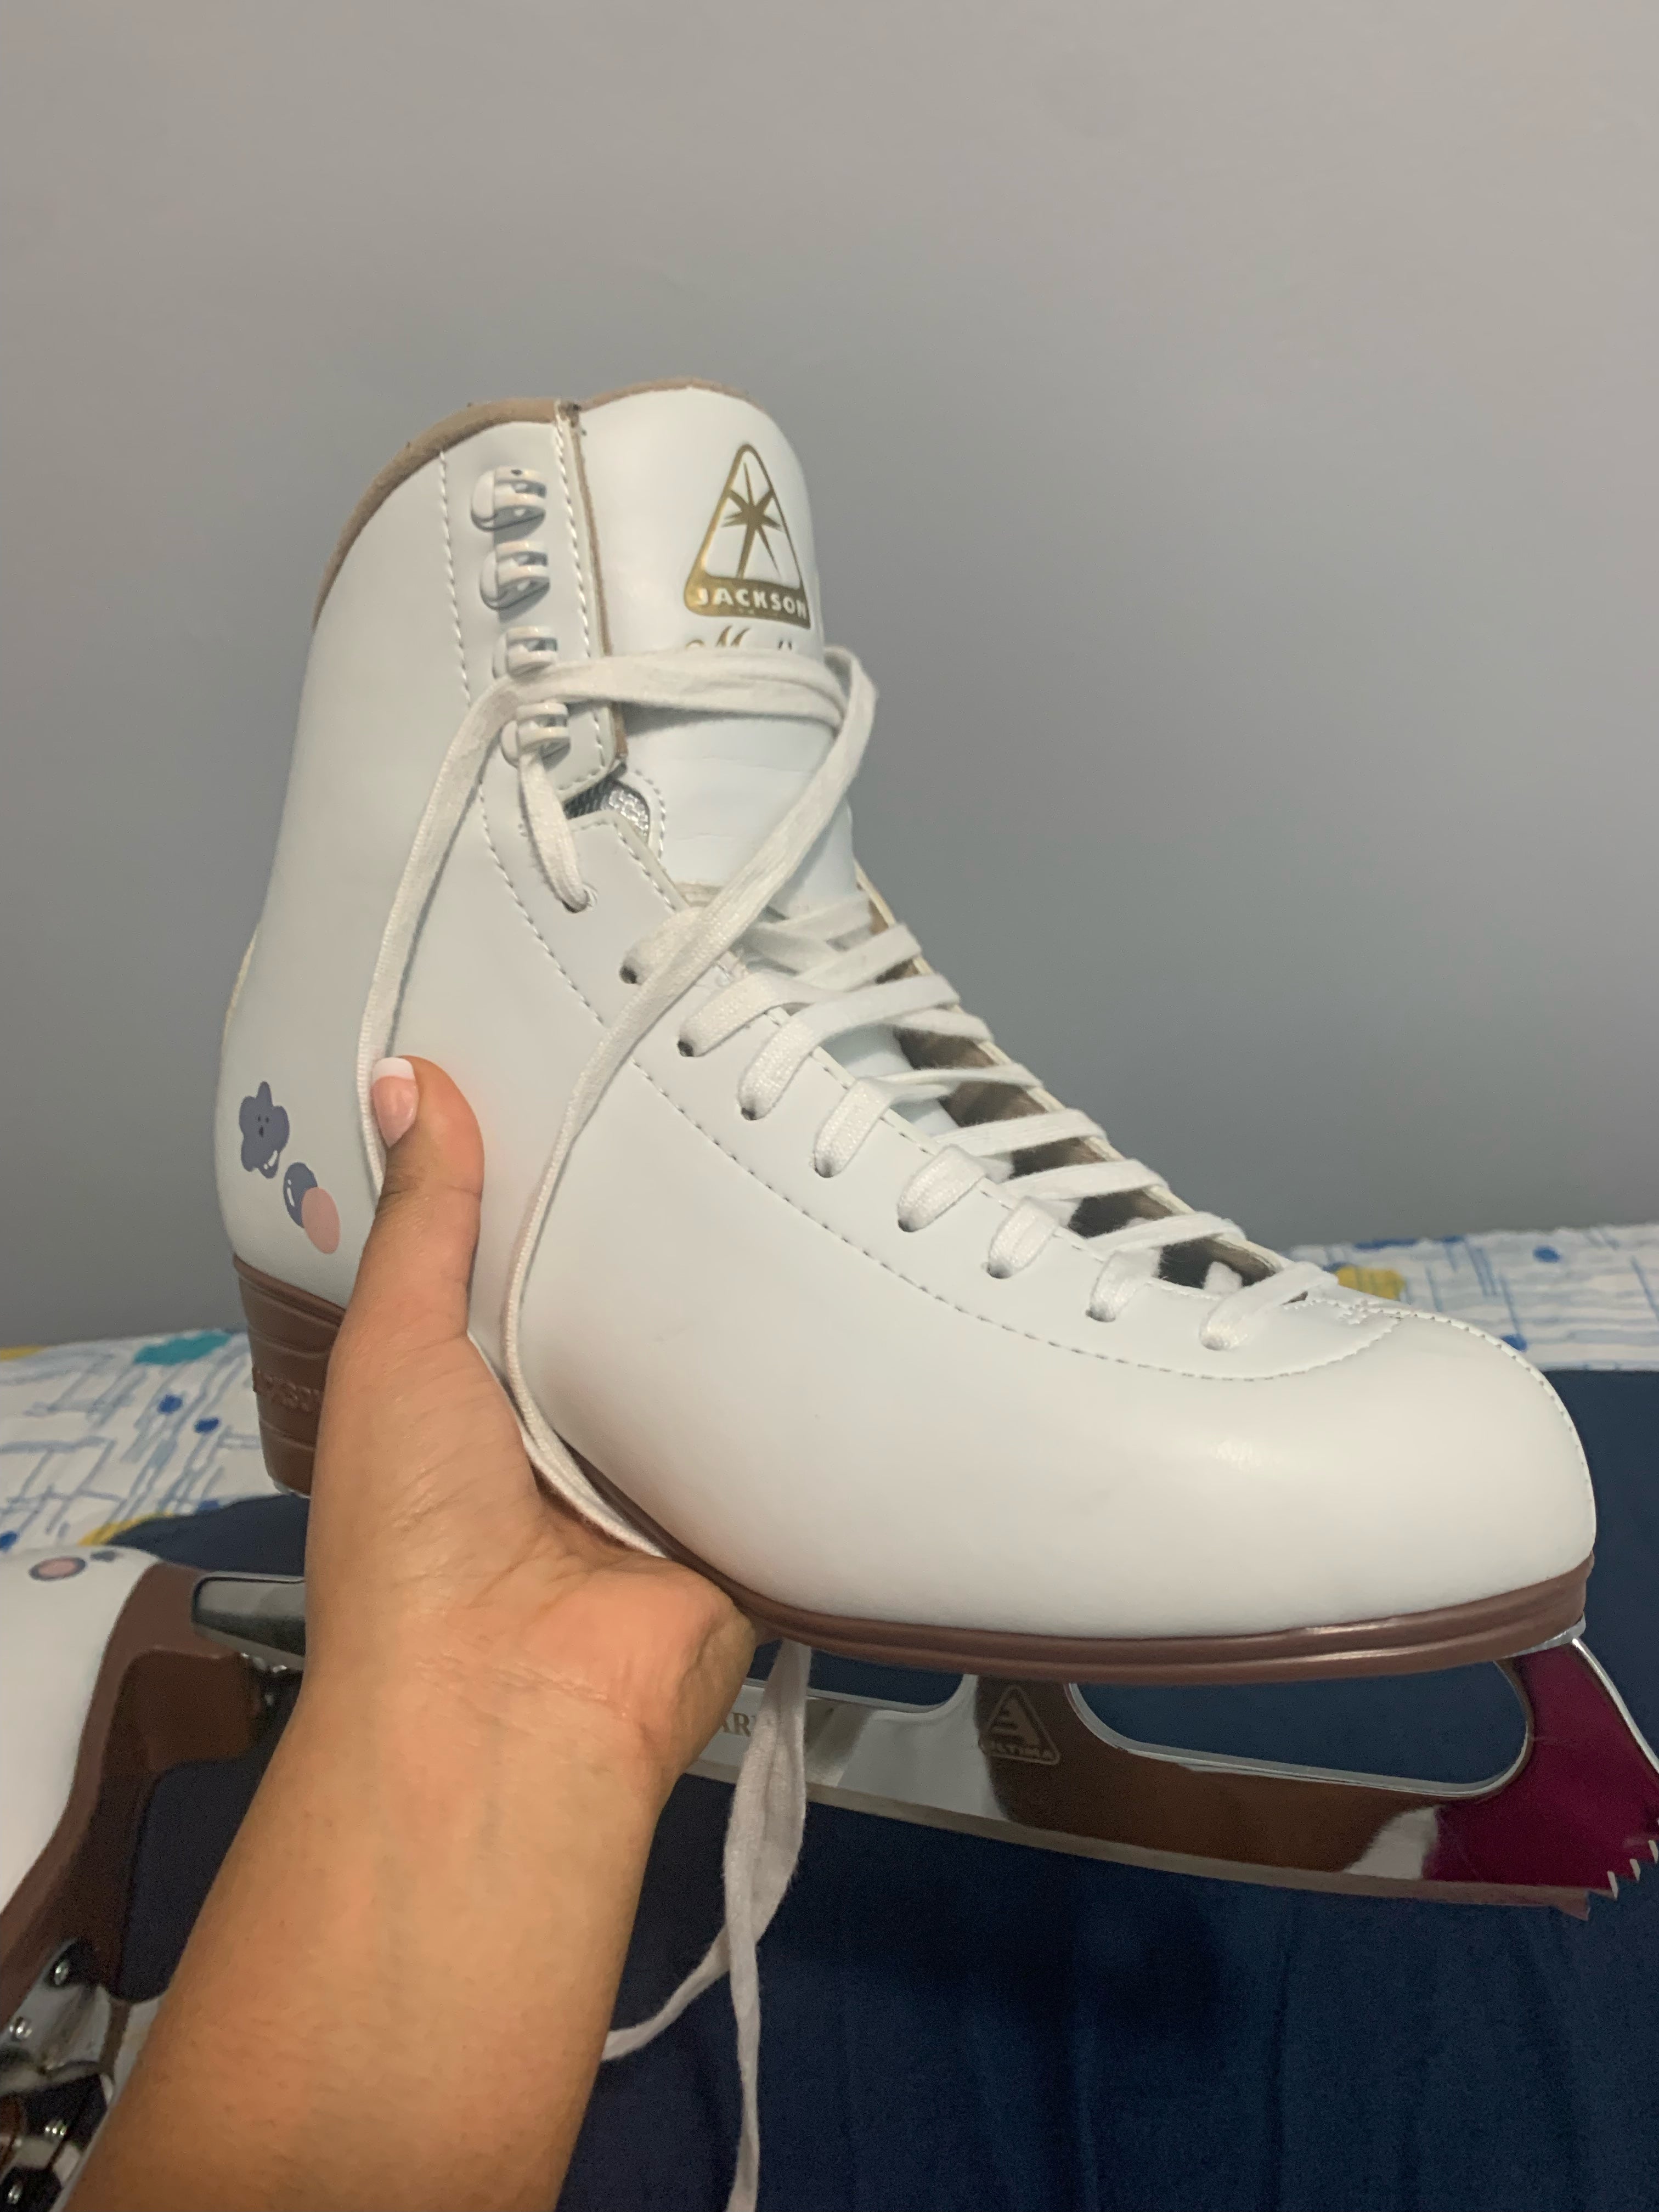 Jackson Ultima Fusion Elle and Freestyle フィギュアアイススケート靴 レディース メンズ ガールズ ボーイズ  2019発売 通販